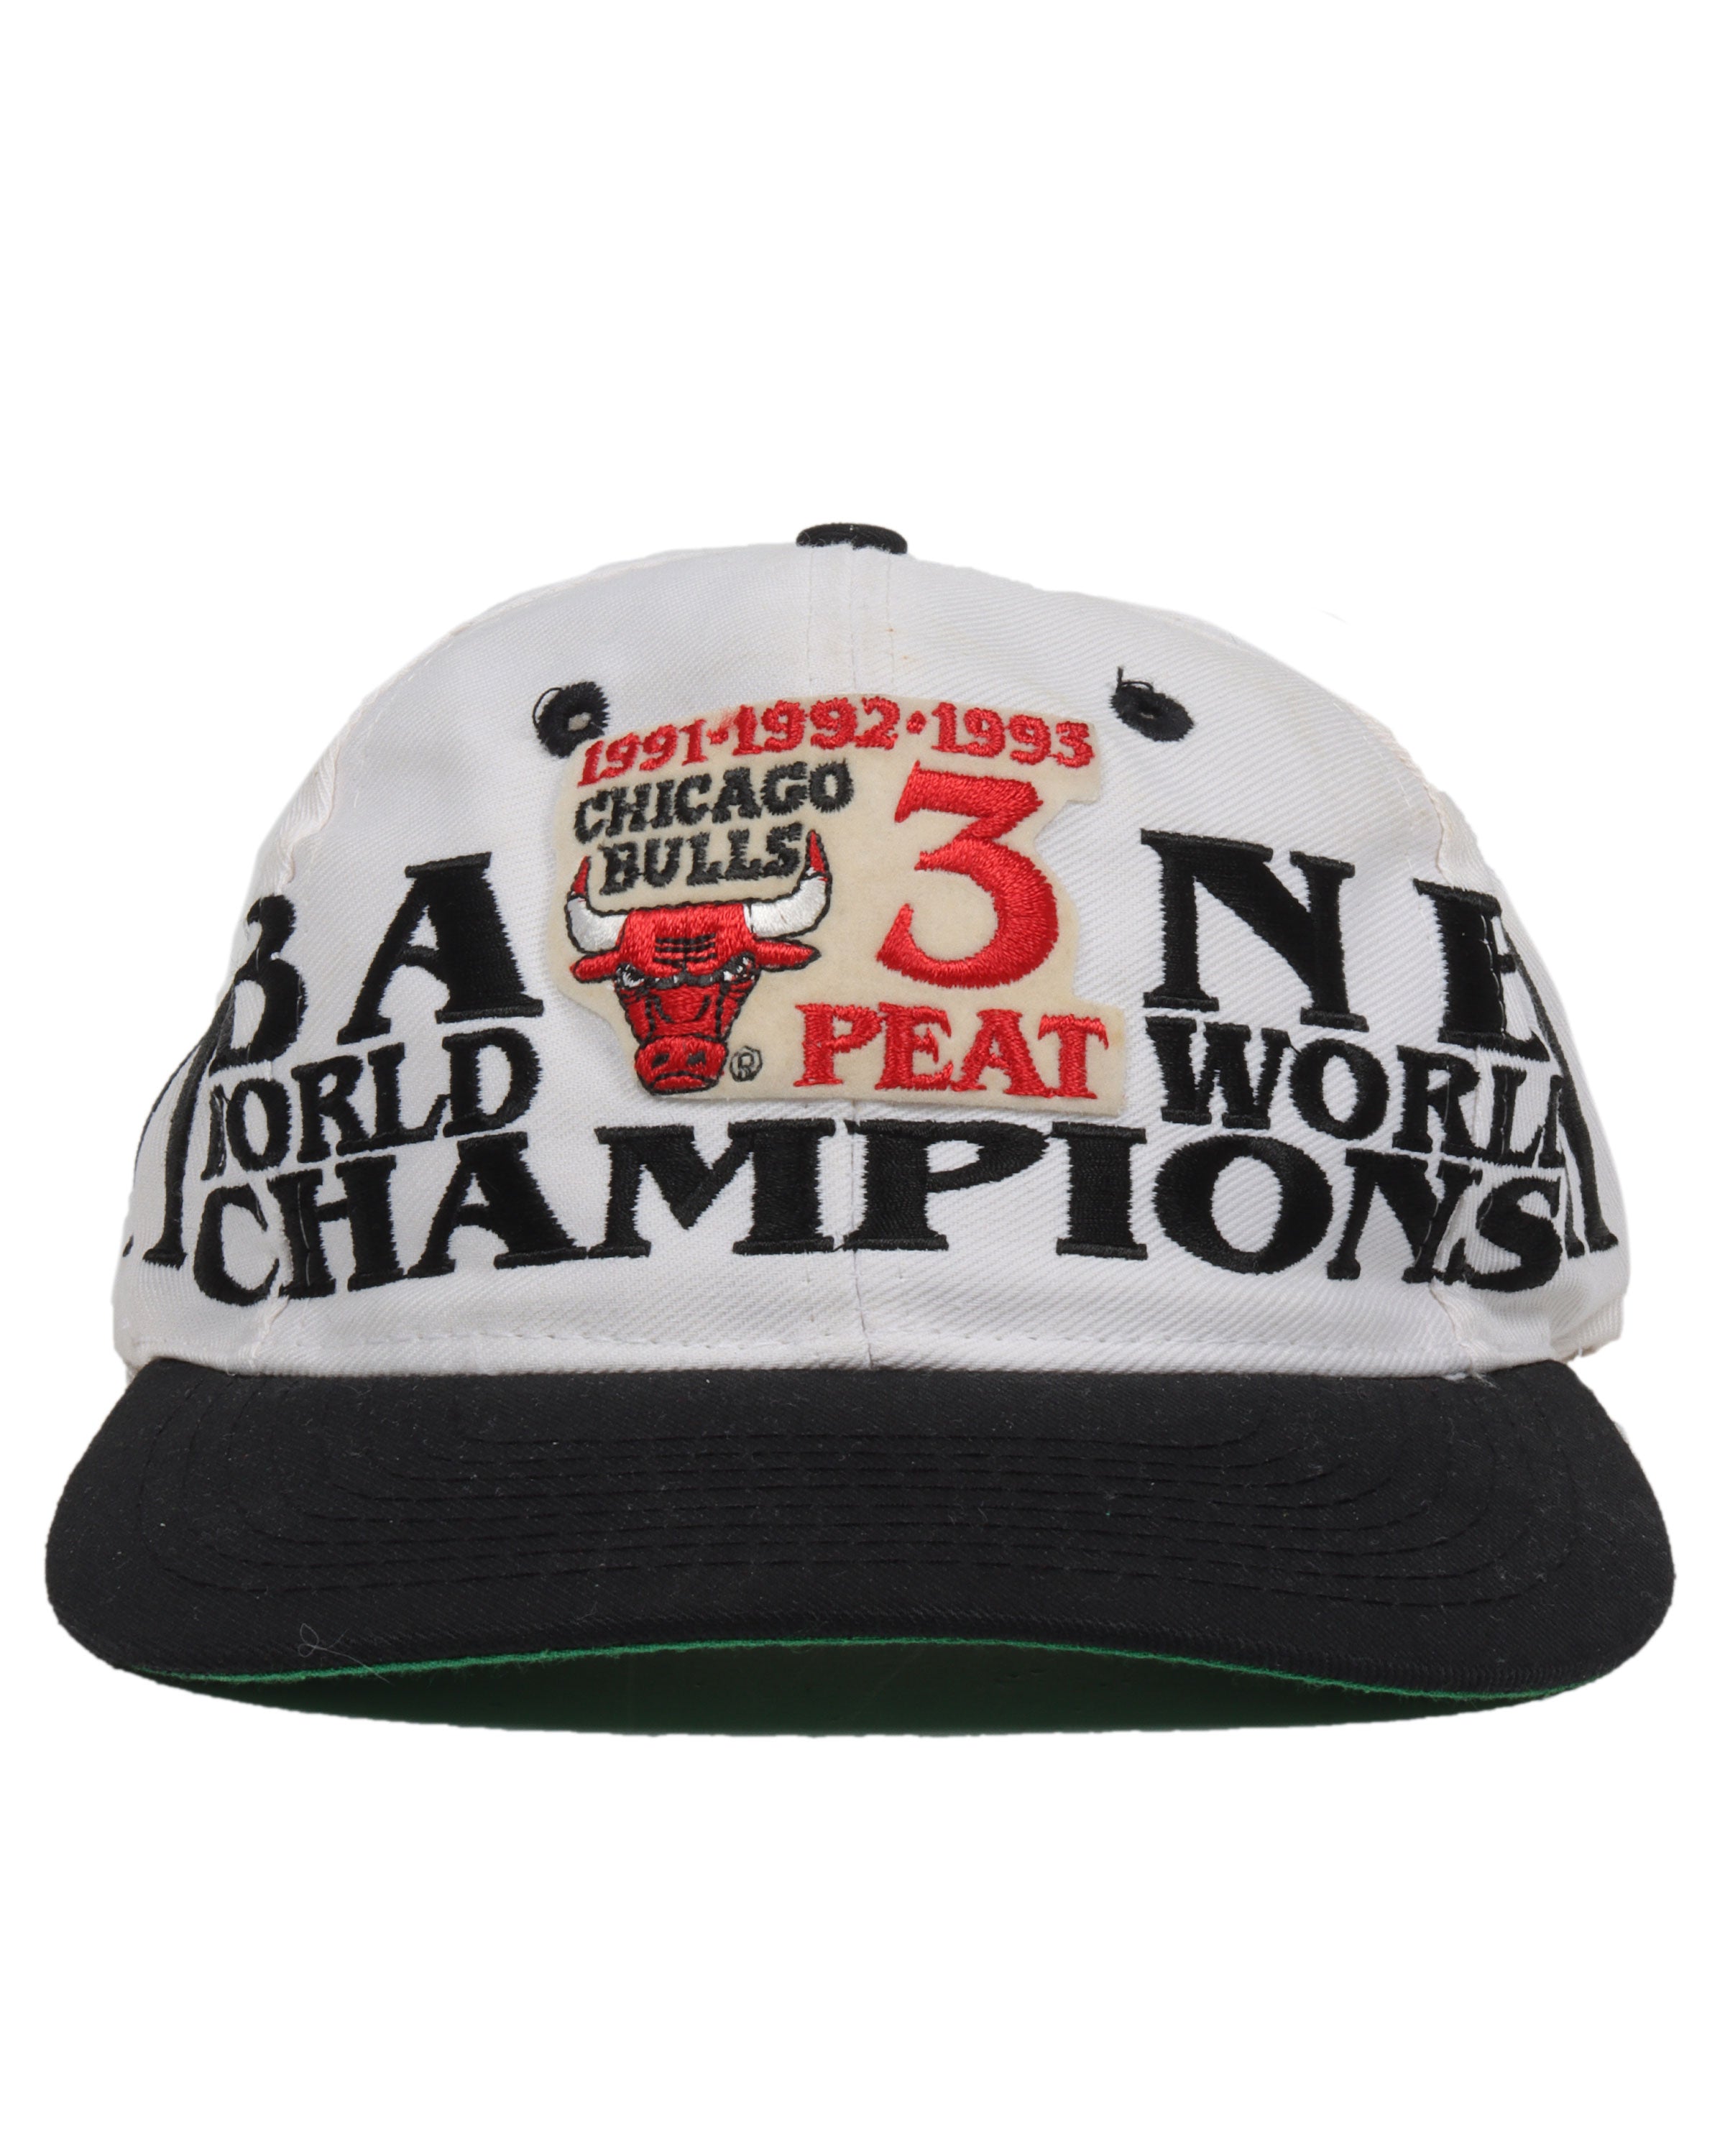 NEW Vintage Rare Chicago Bulls NBA Basketball 3 Peat Champions Hat Vtg  Snapback